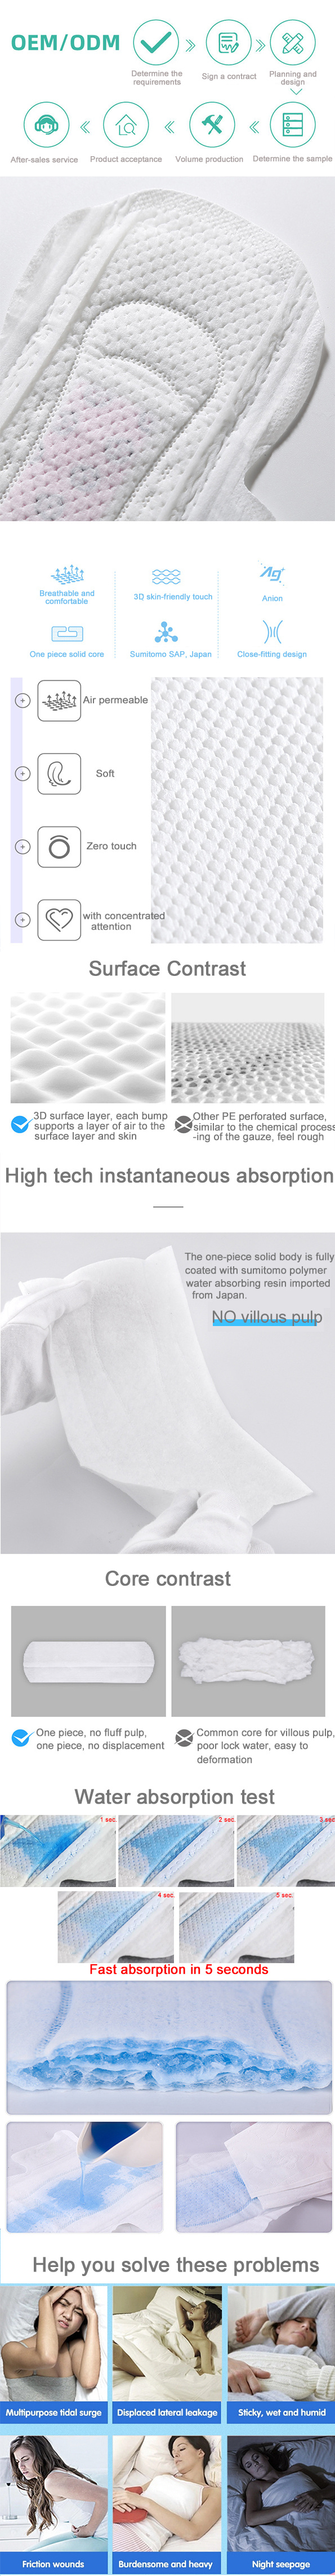 Natural Soft Care Organic Cotton Menstrual Biodegradable Sanitary Napkin240mm